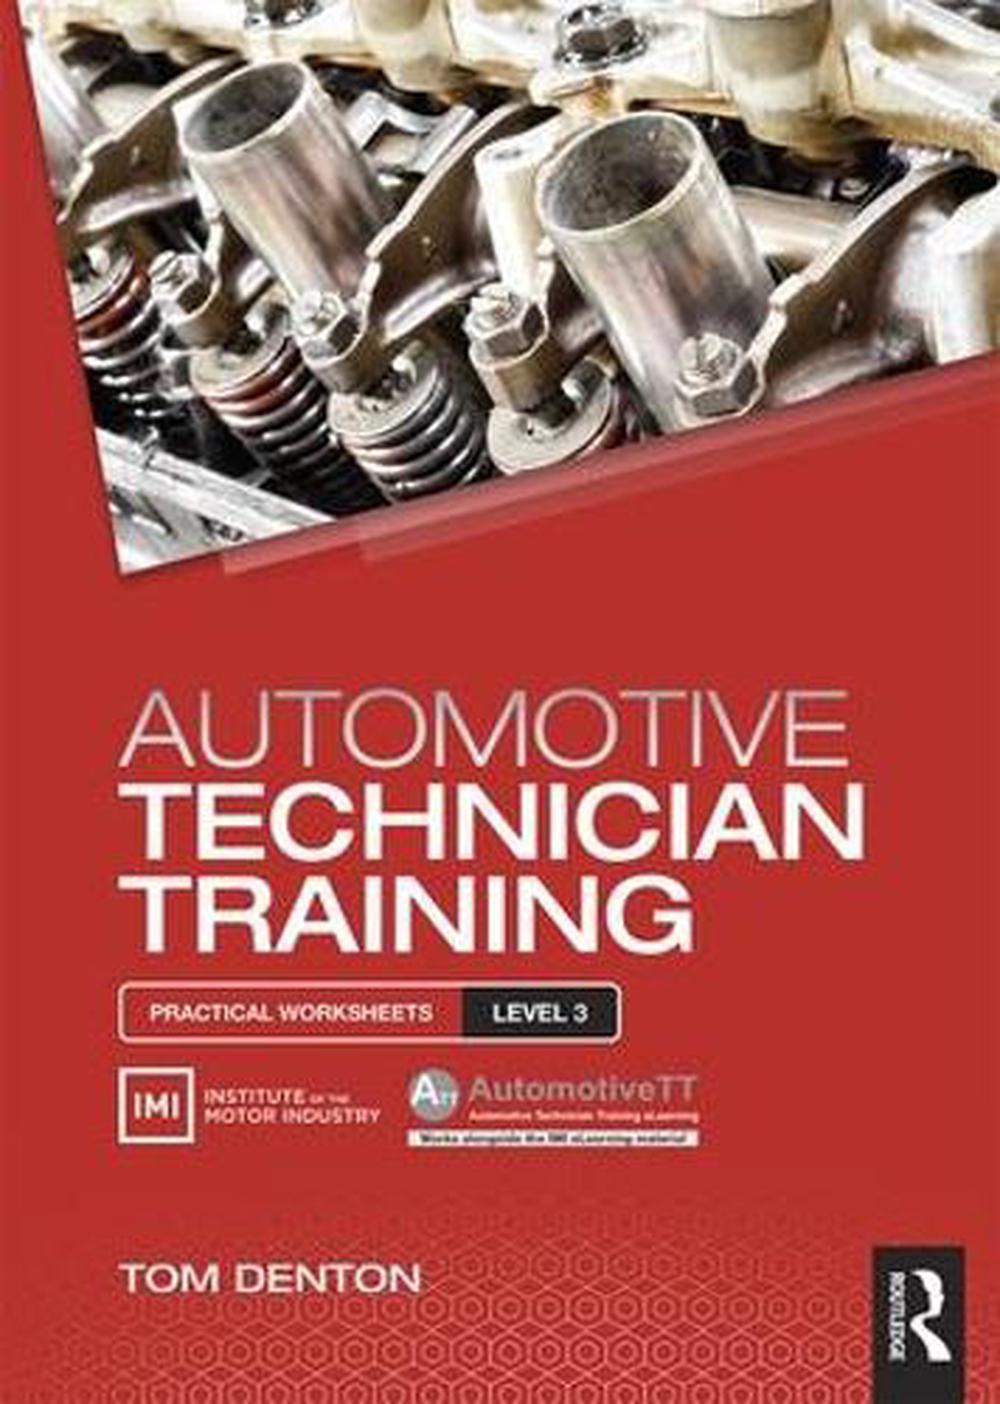 automotive-technician-training-practical-worksheets-level-3-by-tom-denton-engl-9781138852419